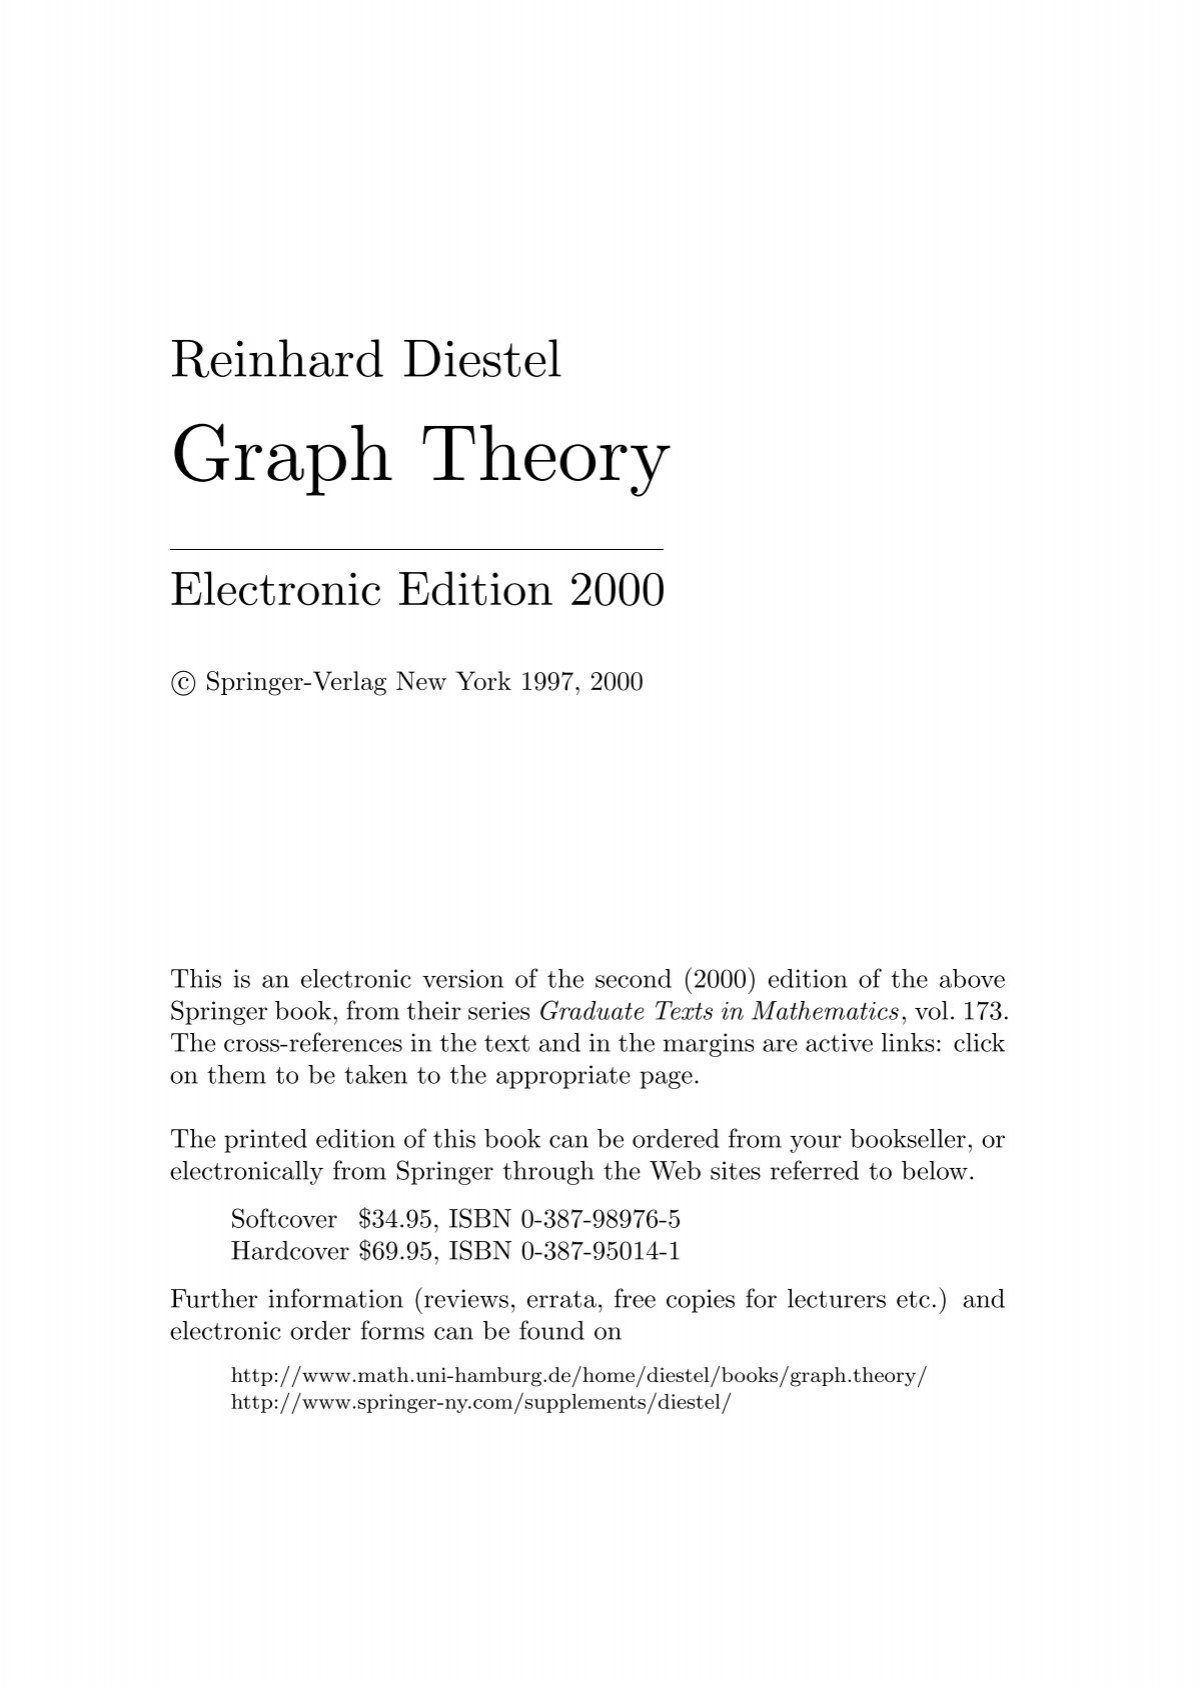 Diestel: Graph Theory - DMI